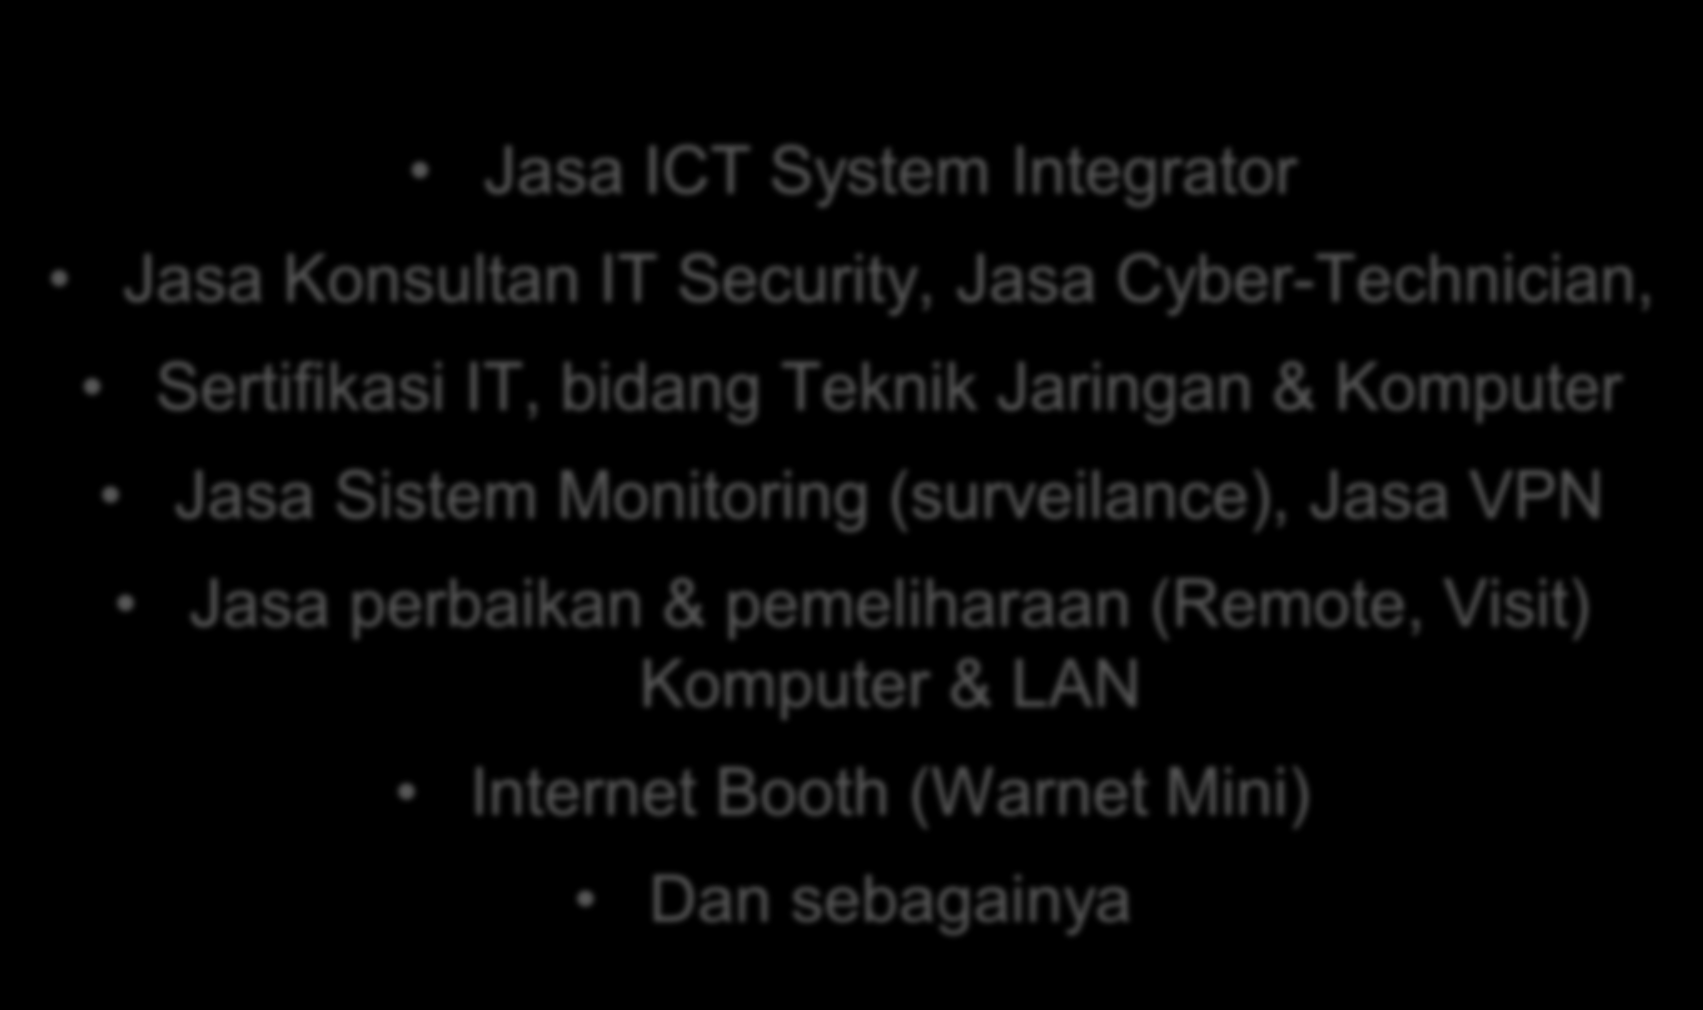 Jasa ICT System Integrator Jasa Konsultan IT Security, Jasa